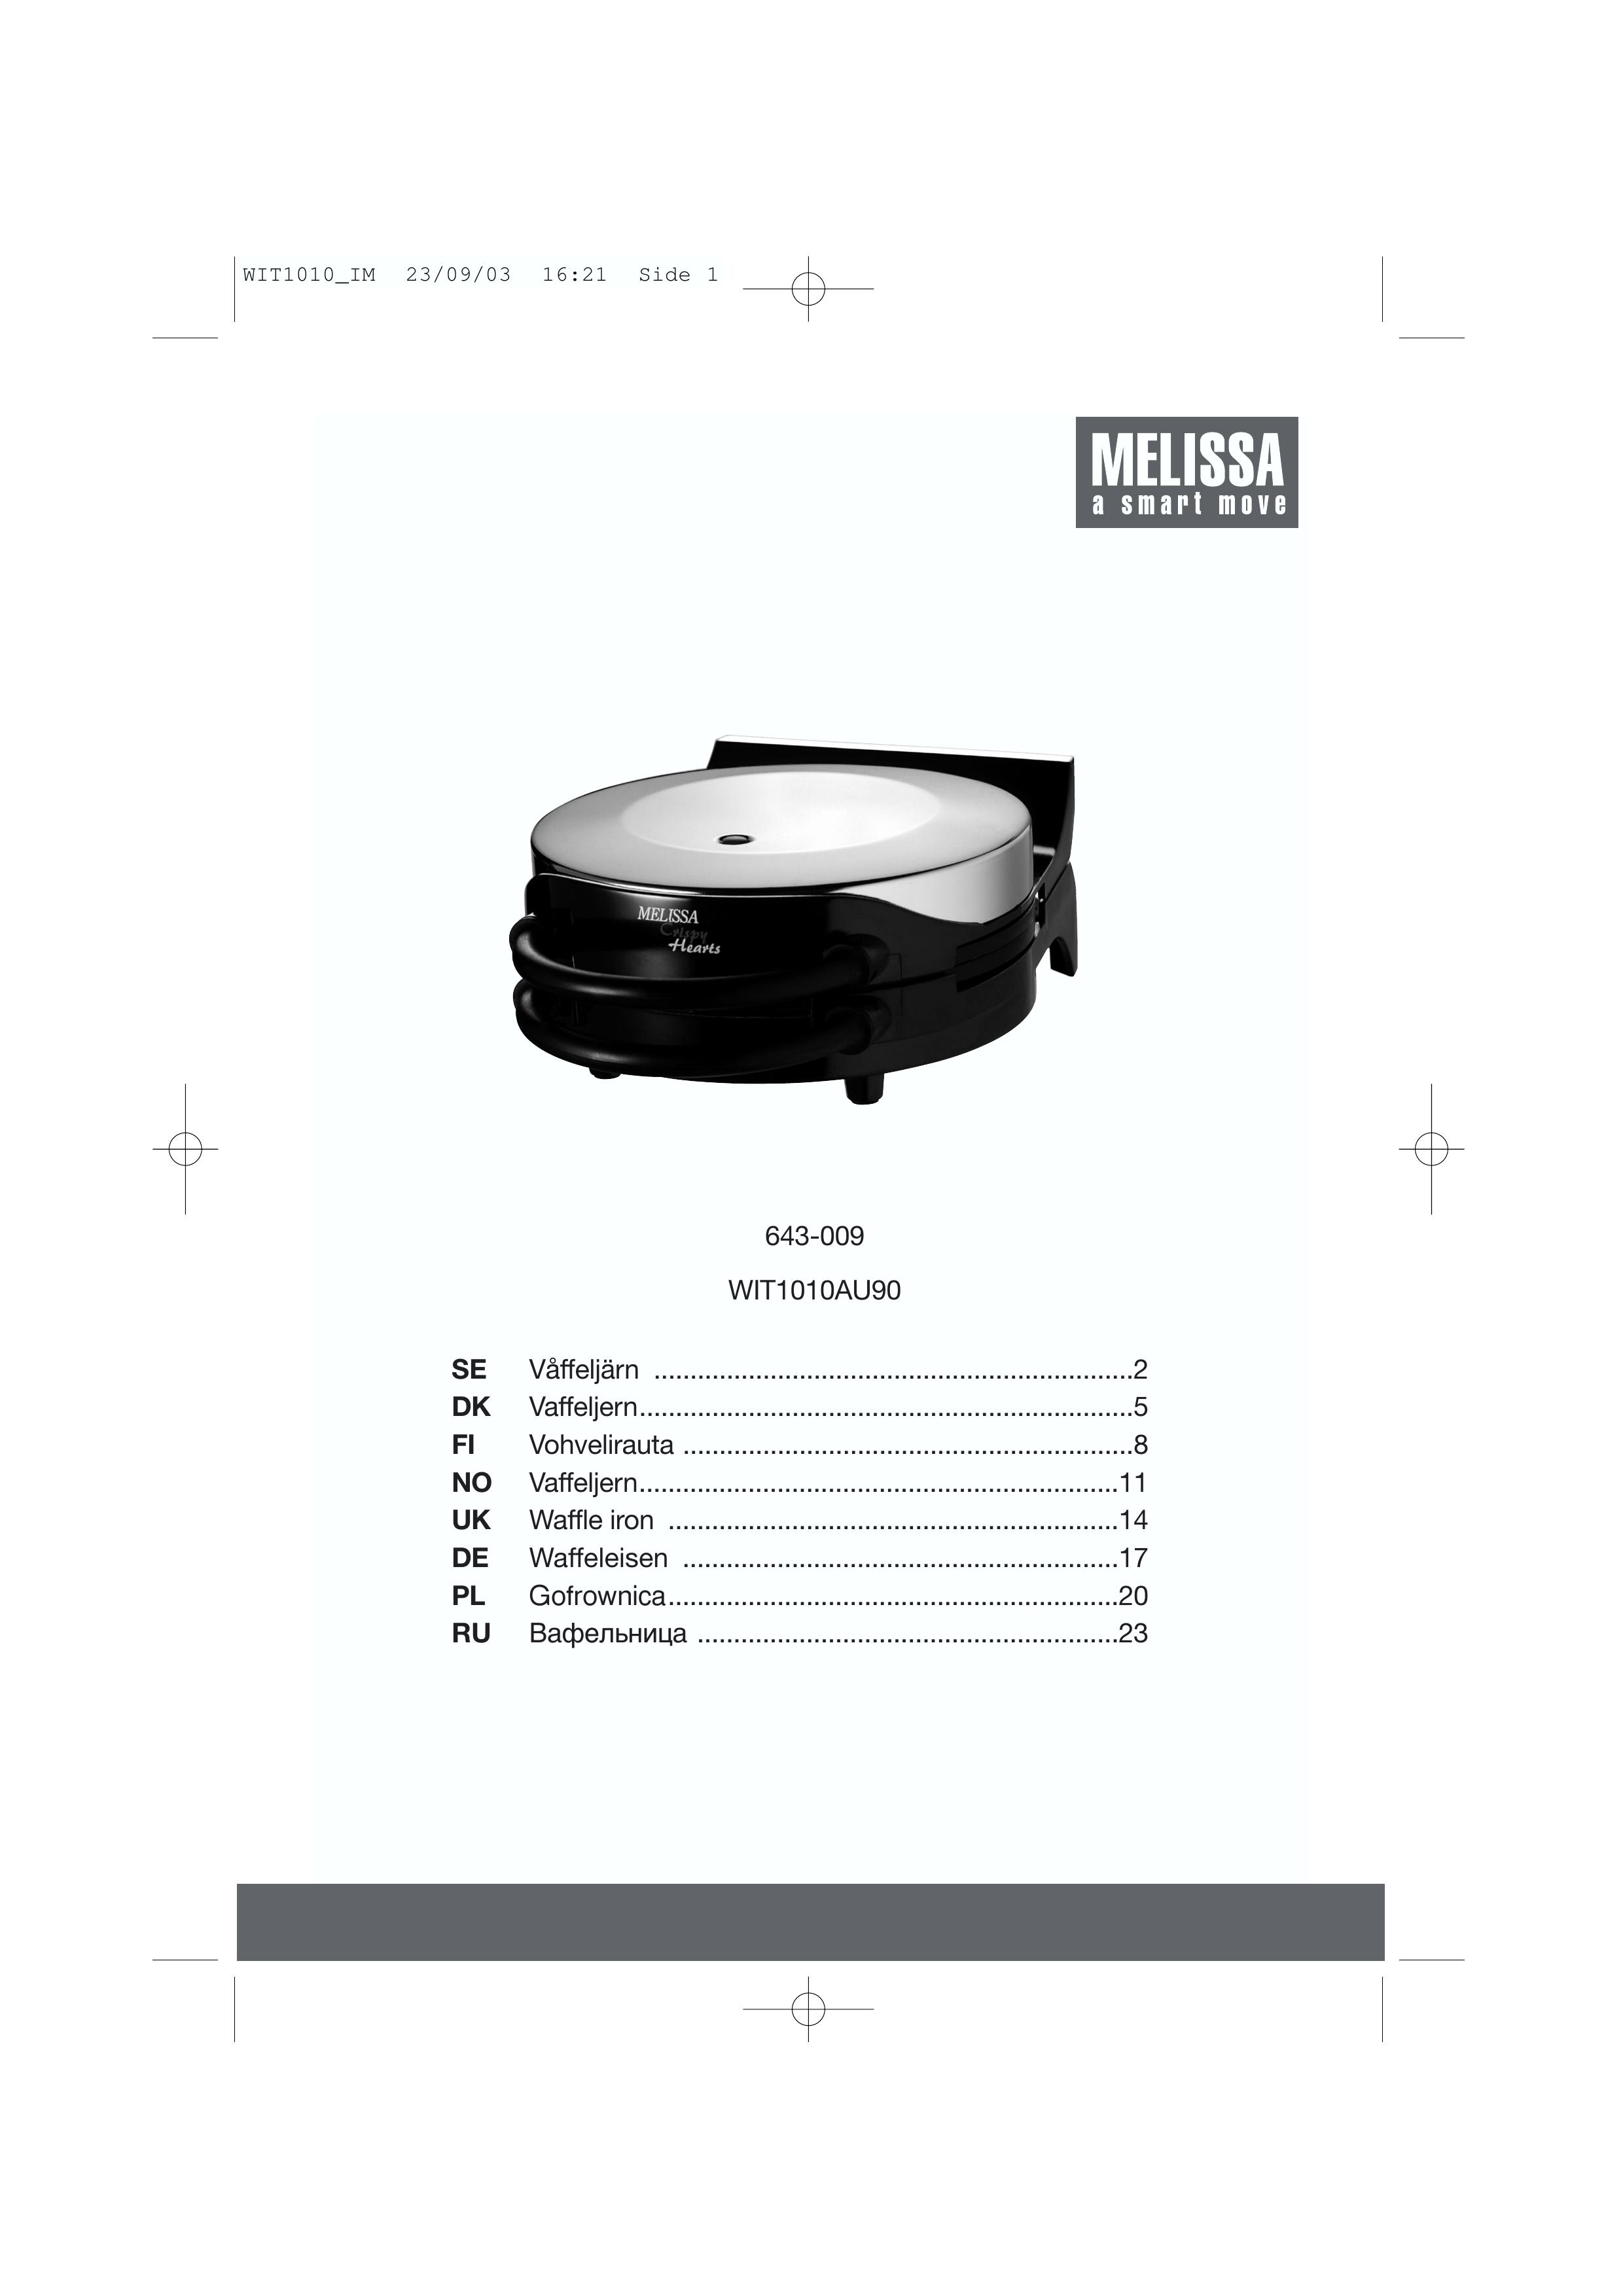 Melissa 643-009 Waffle Iron User Manual